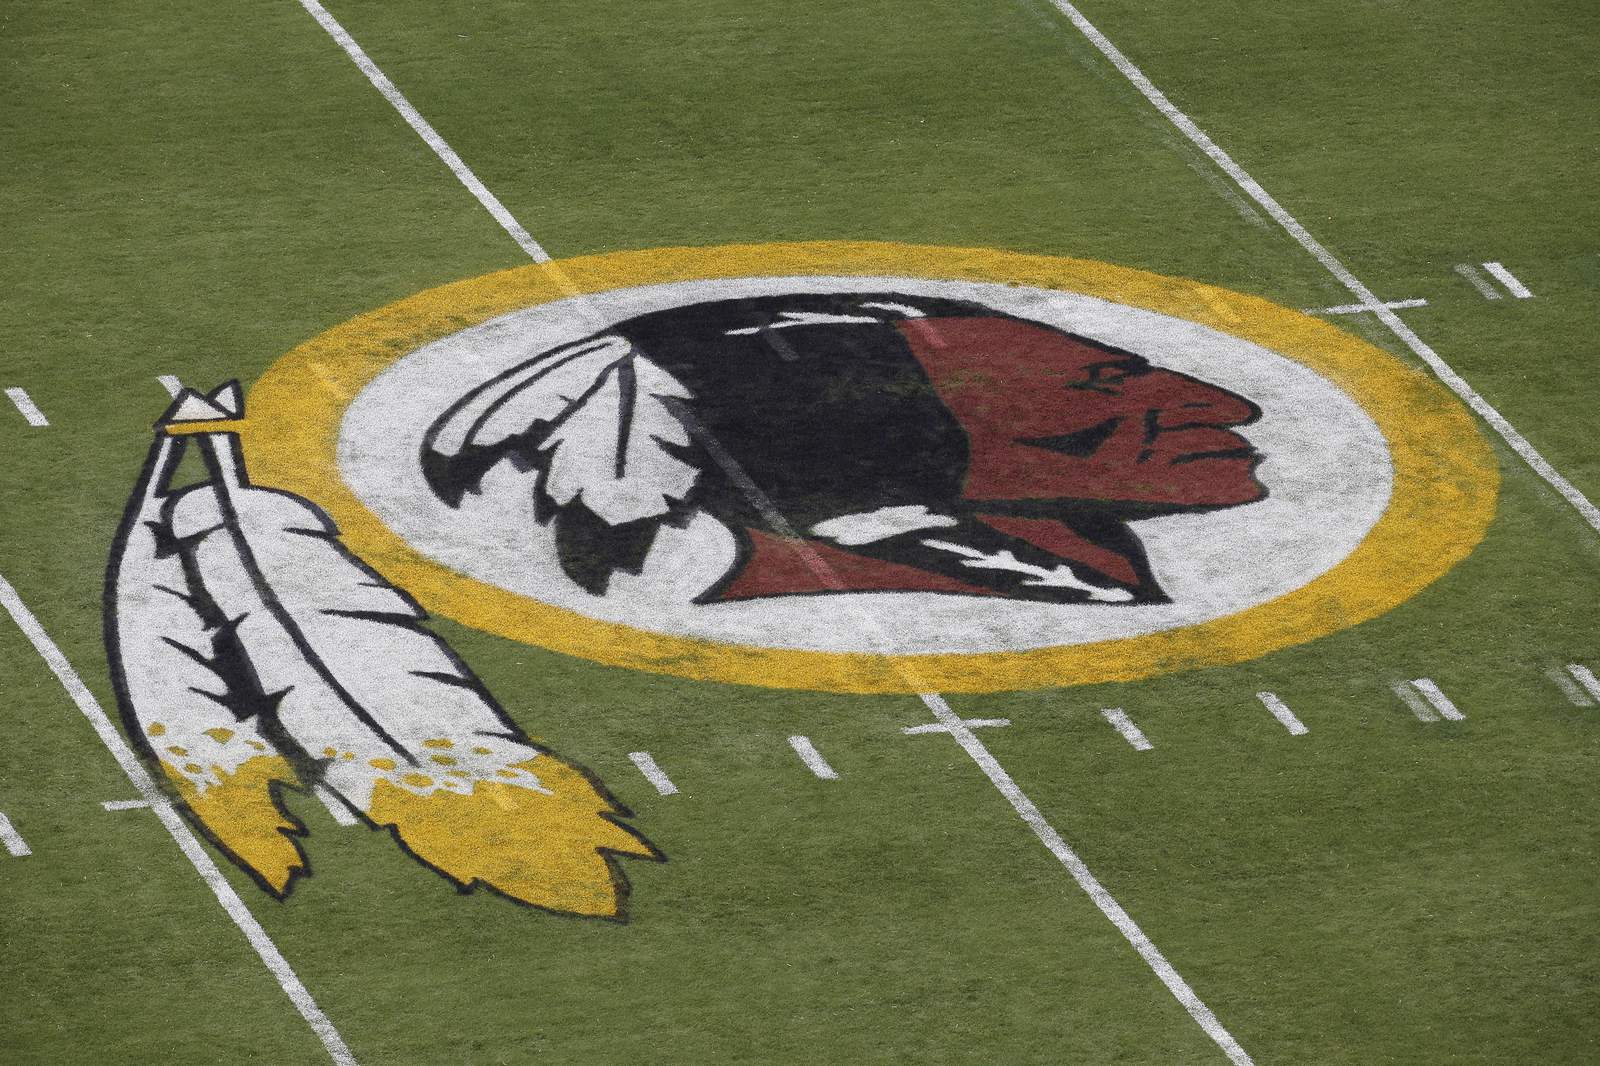 Washington Post calls on Skins' owner or NFL to change name